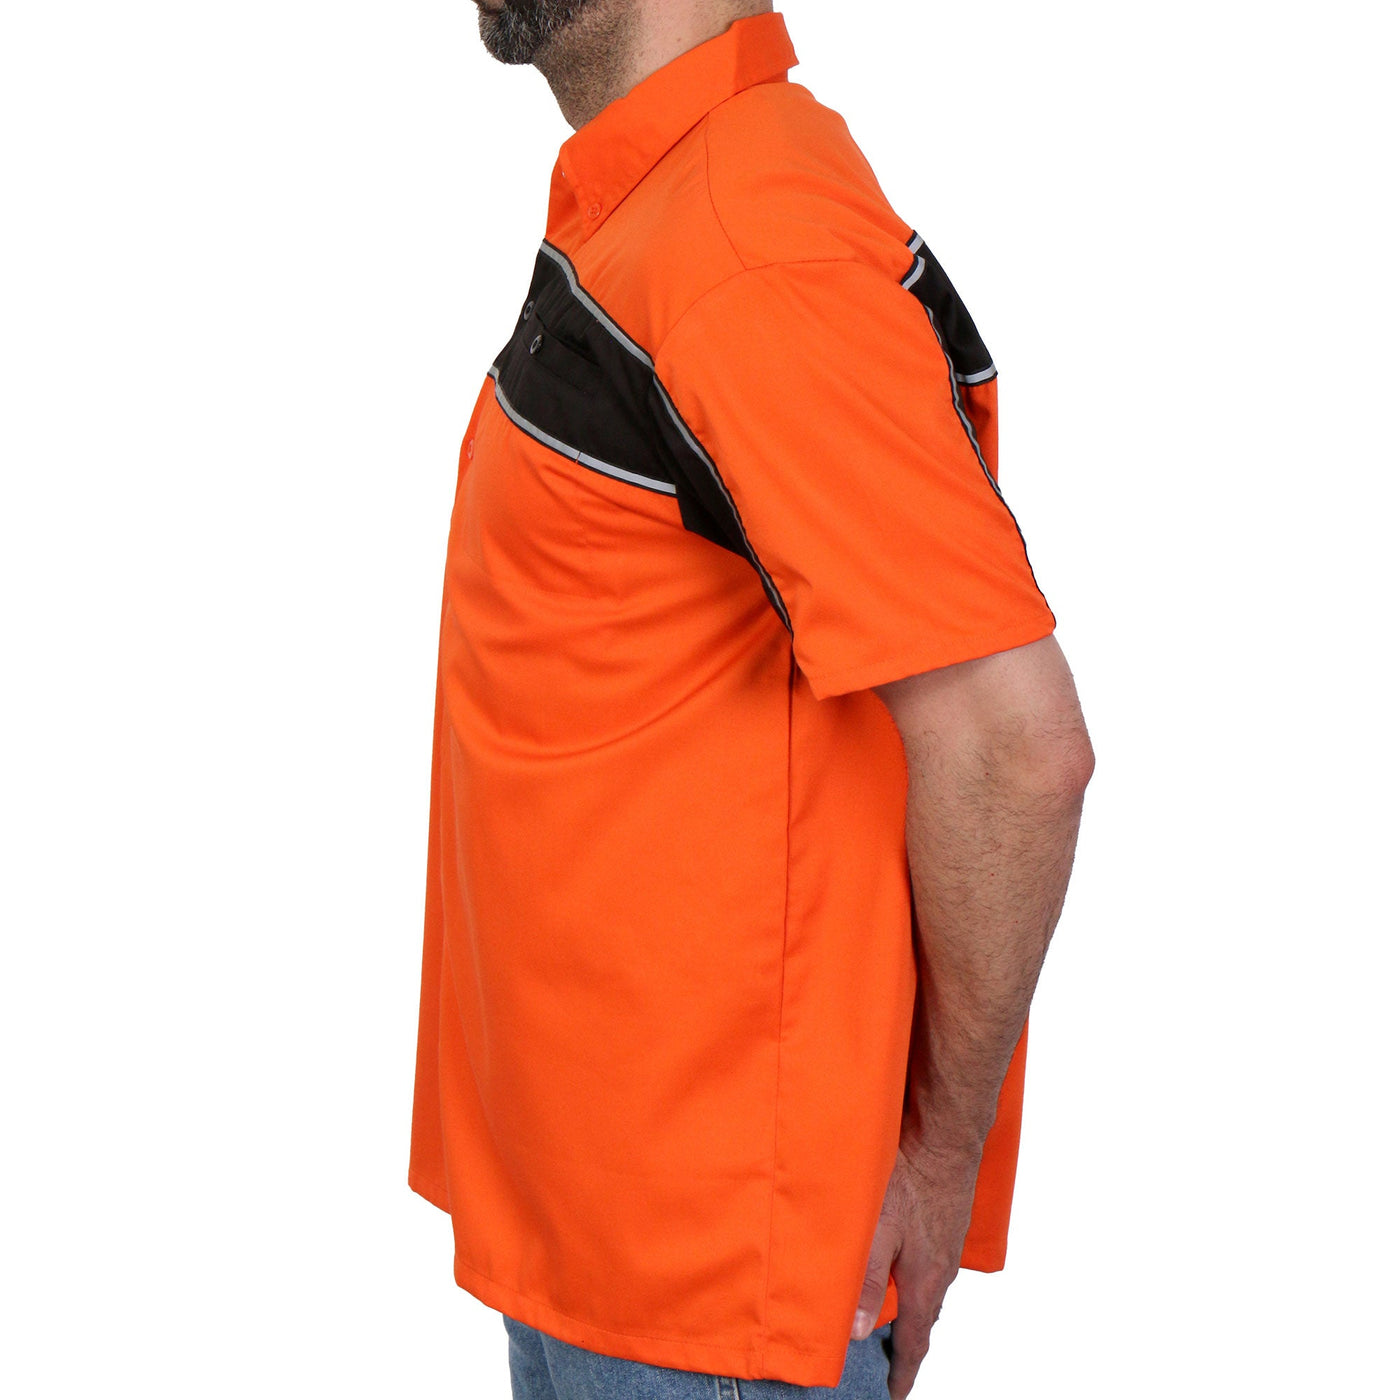 Hot Leathers 2 Tone Stiped Orange and Black Mechanics Shirt GMM1007